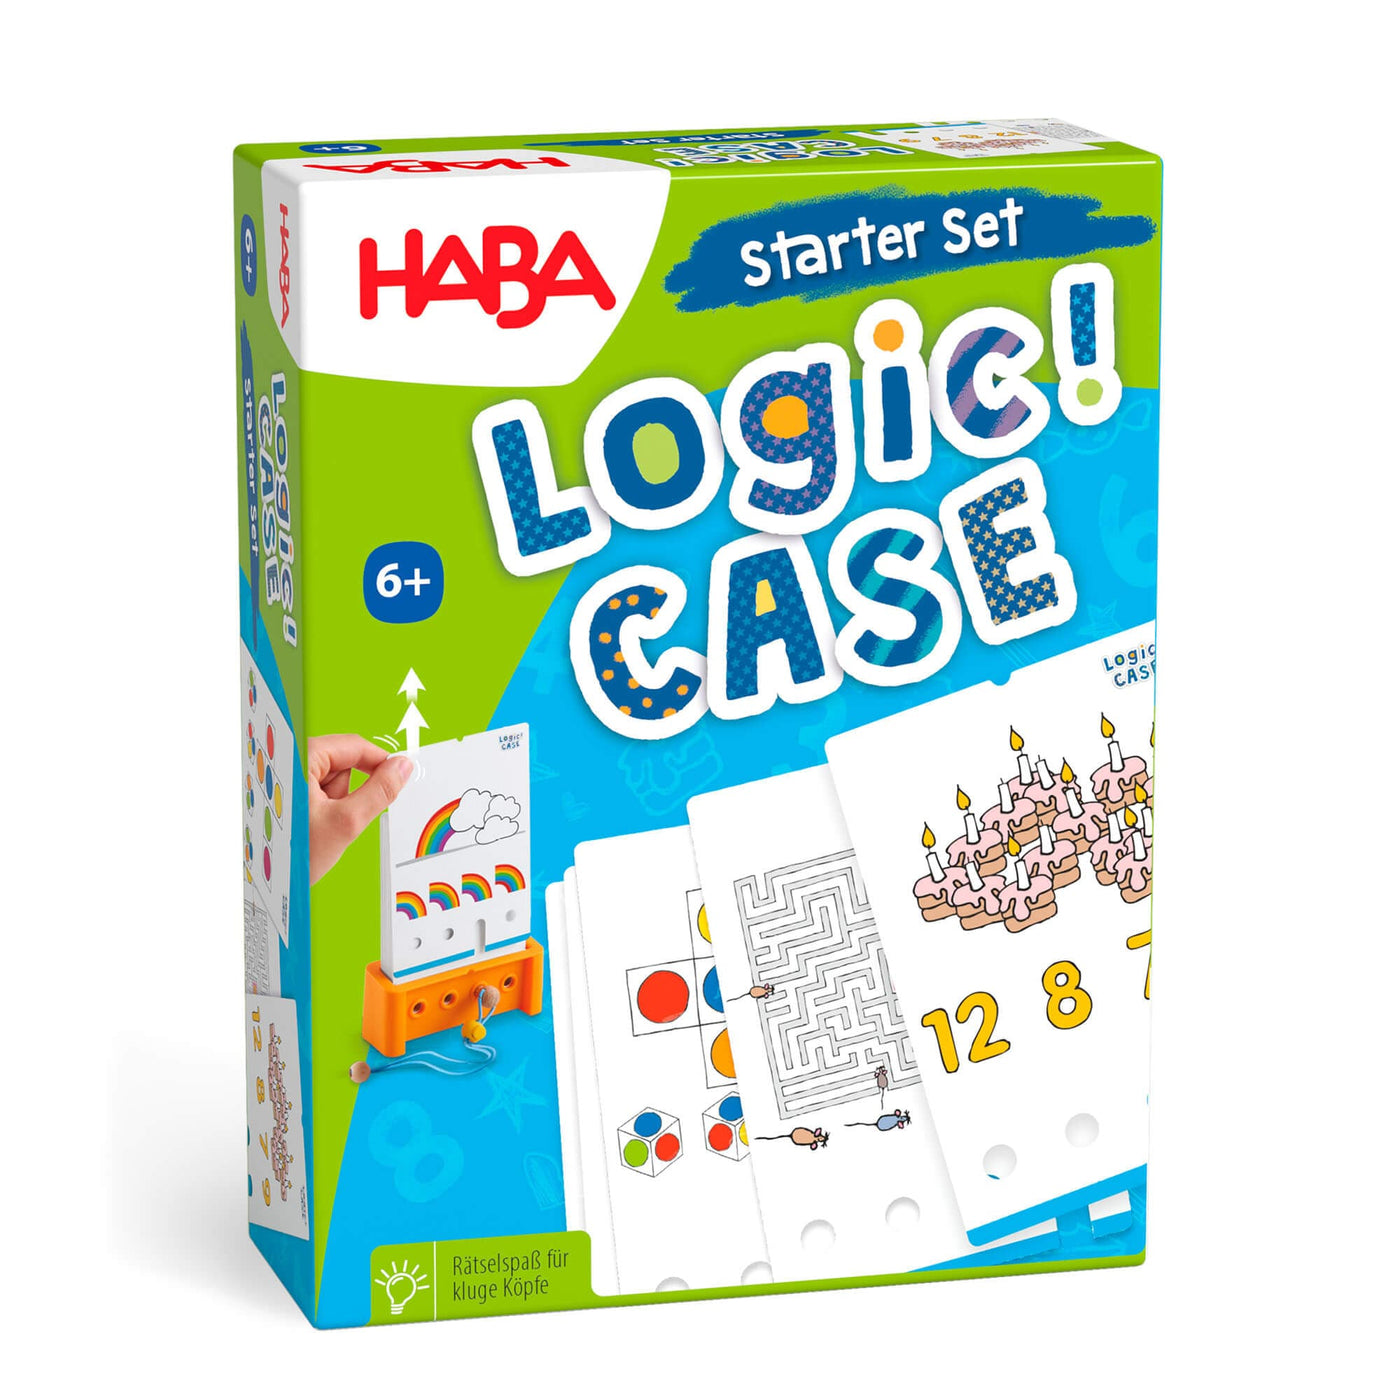 Logic! CASE Starter Set 6+ - HABA USA